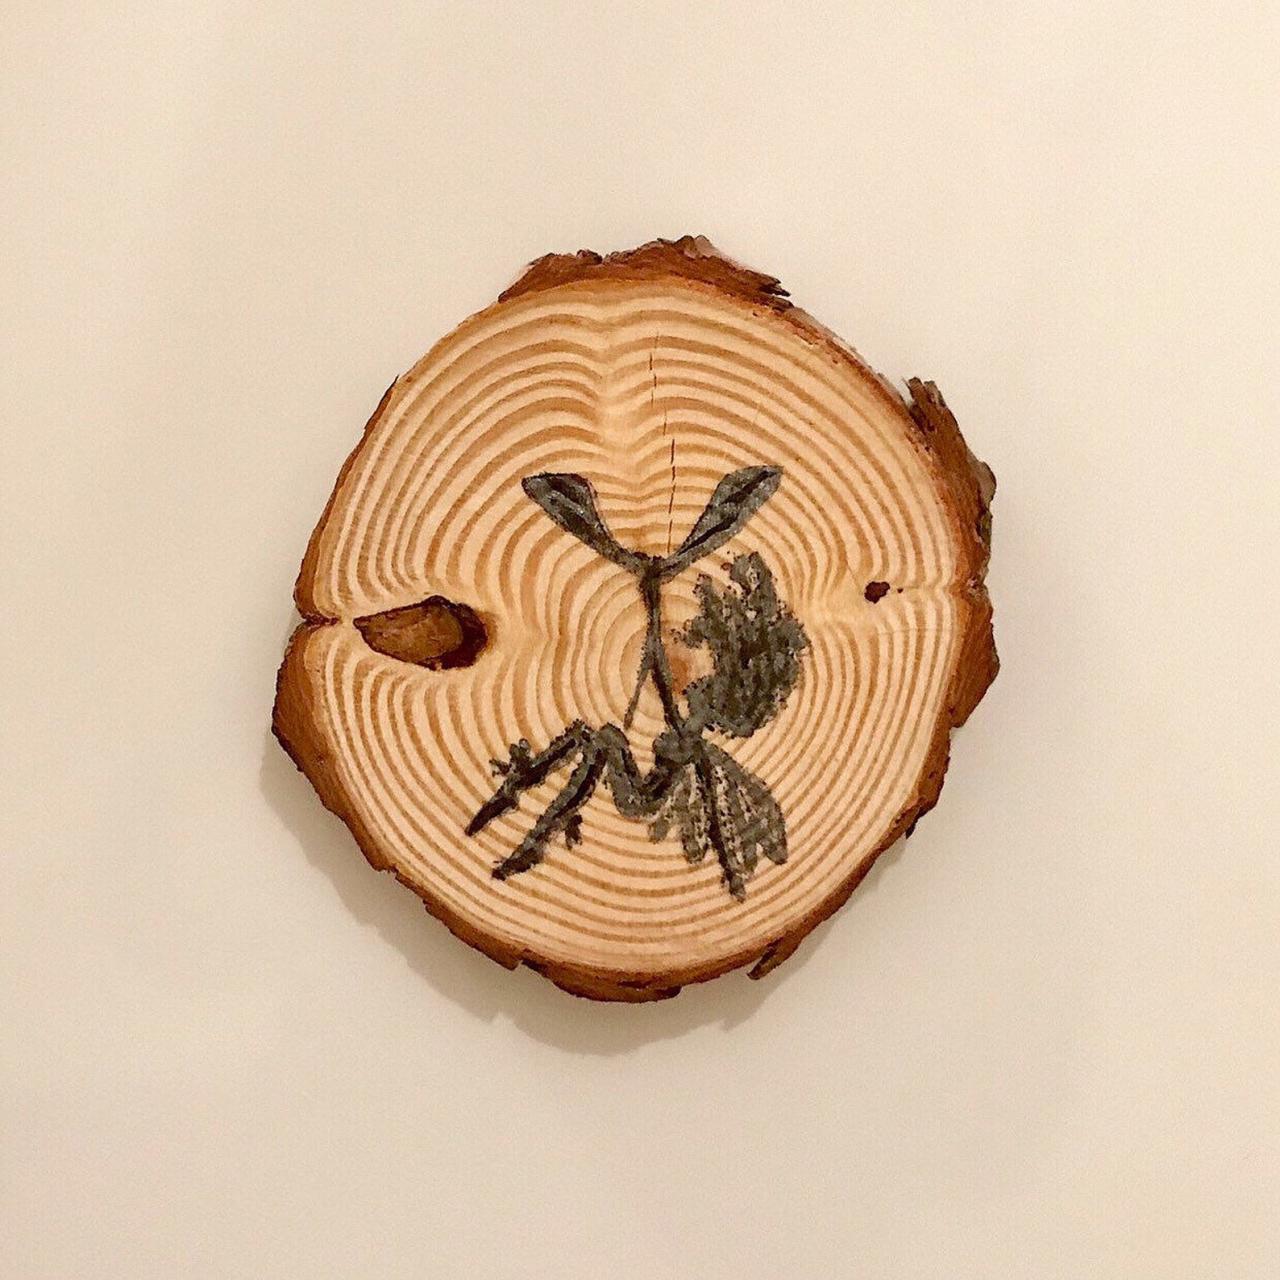 Painted fairy magnet on wood